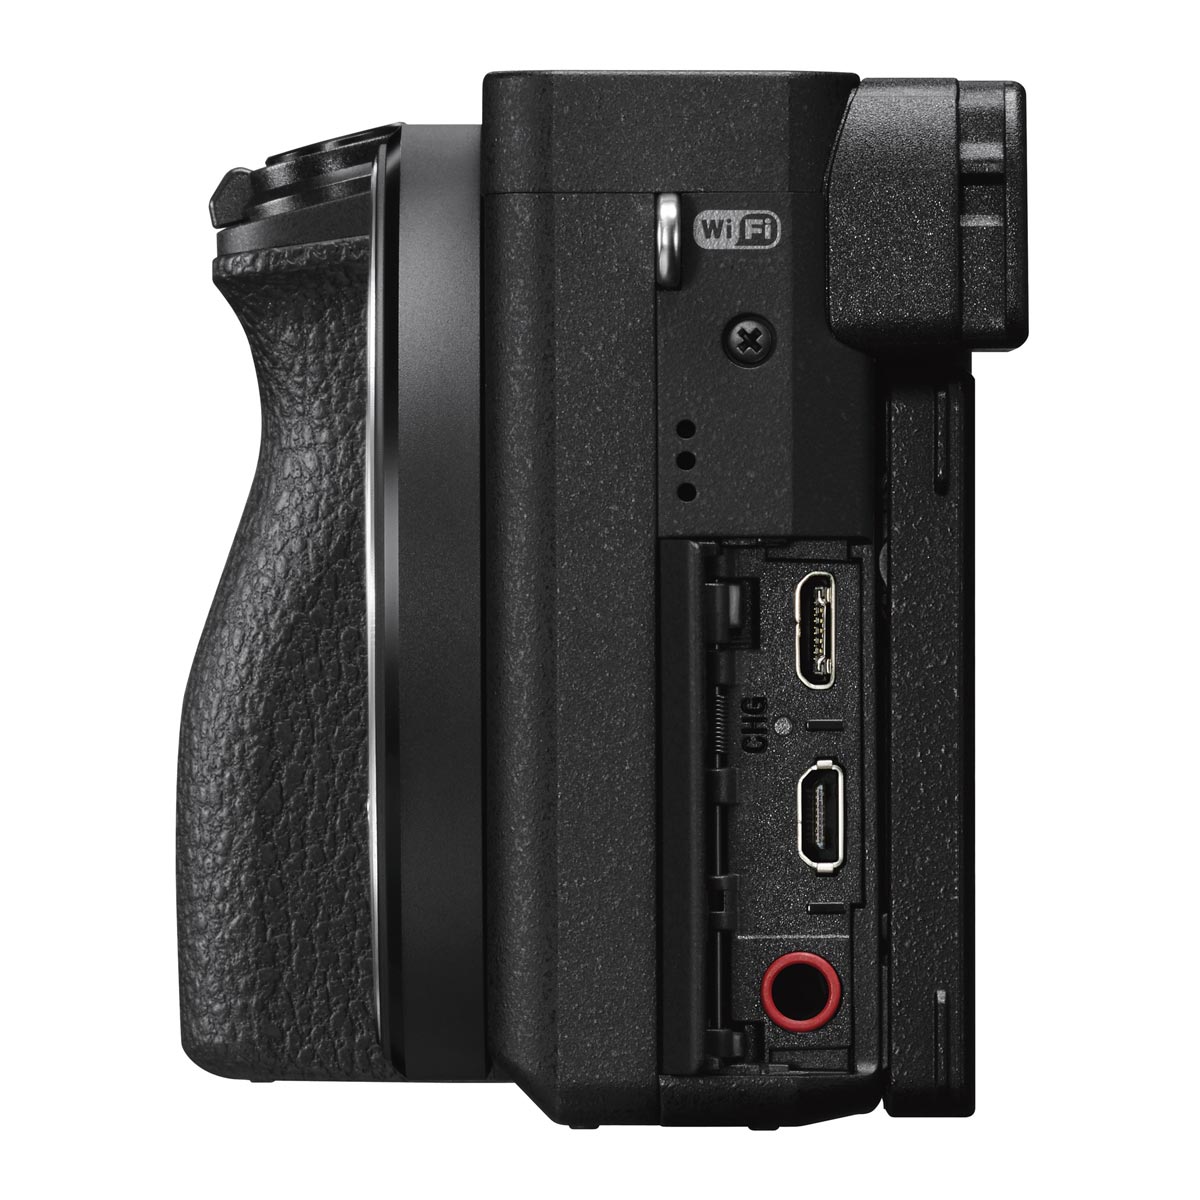 Sony Alpha a6500 Mirrorless Digital Camera with E-Mount 18-135mm Lens (Black)